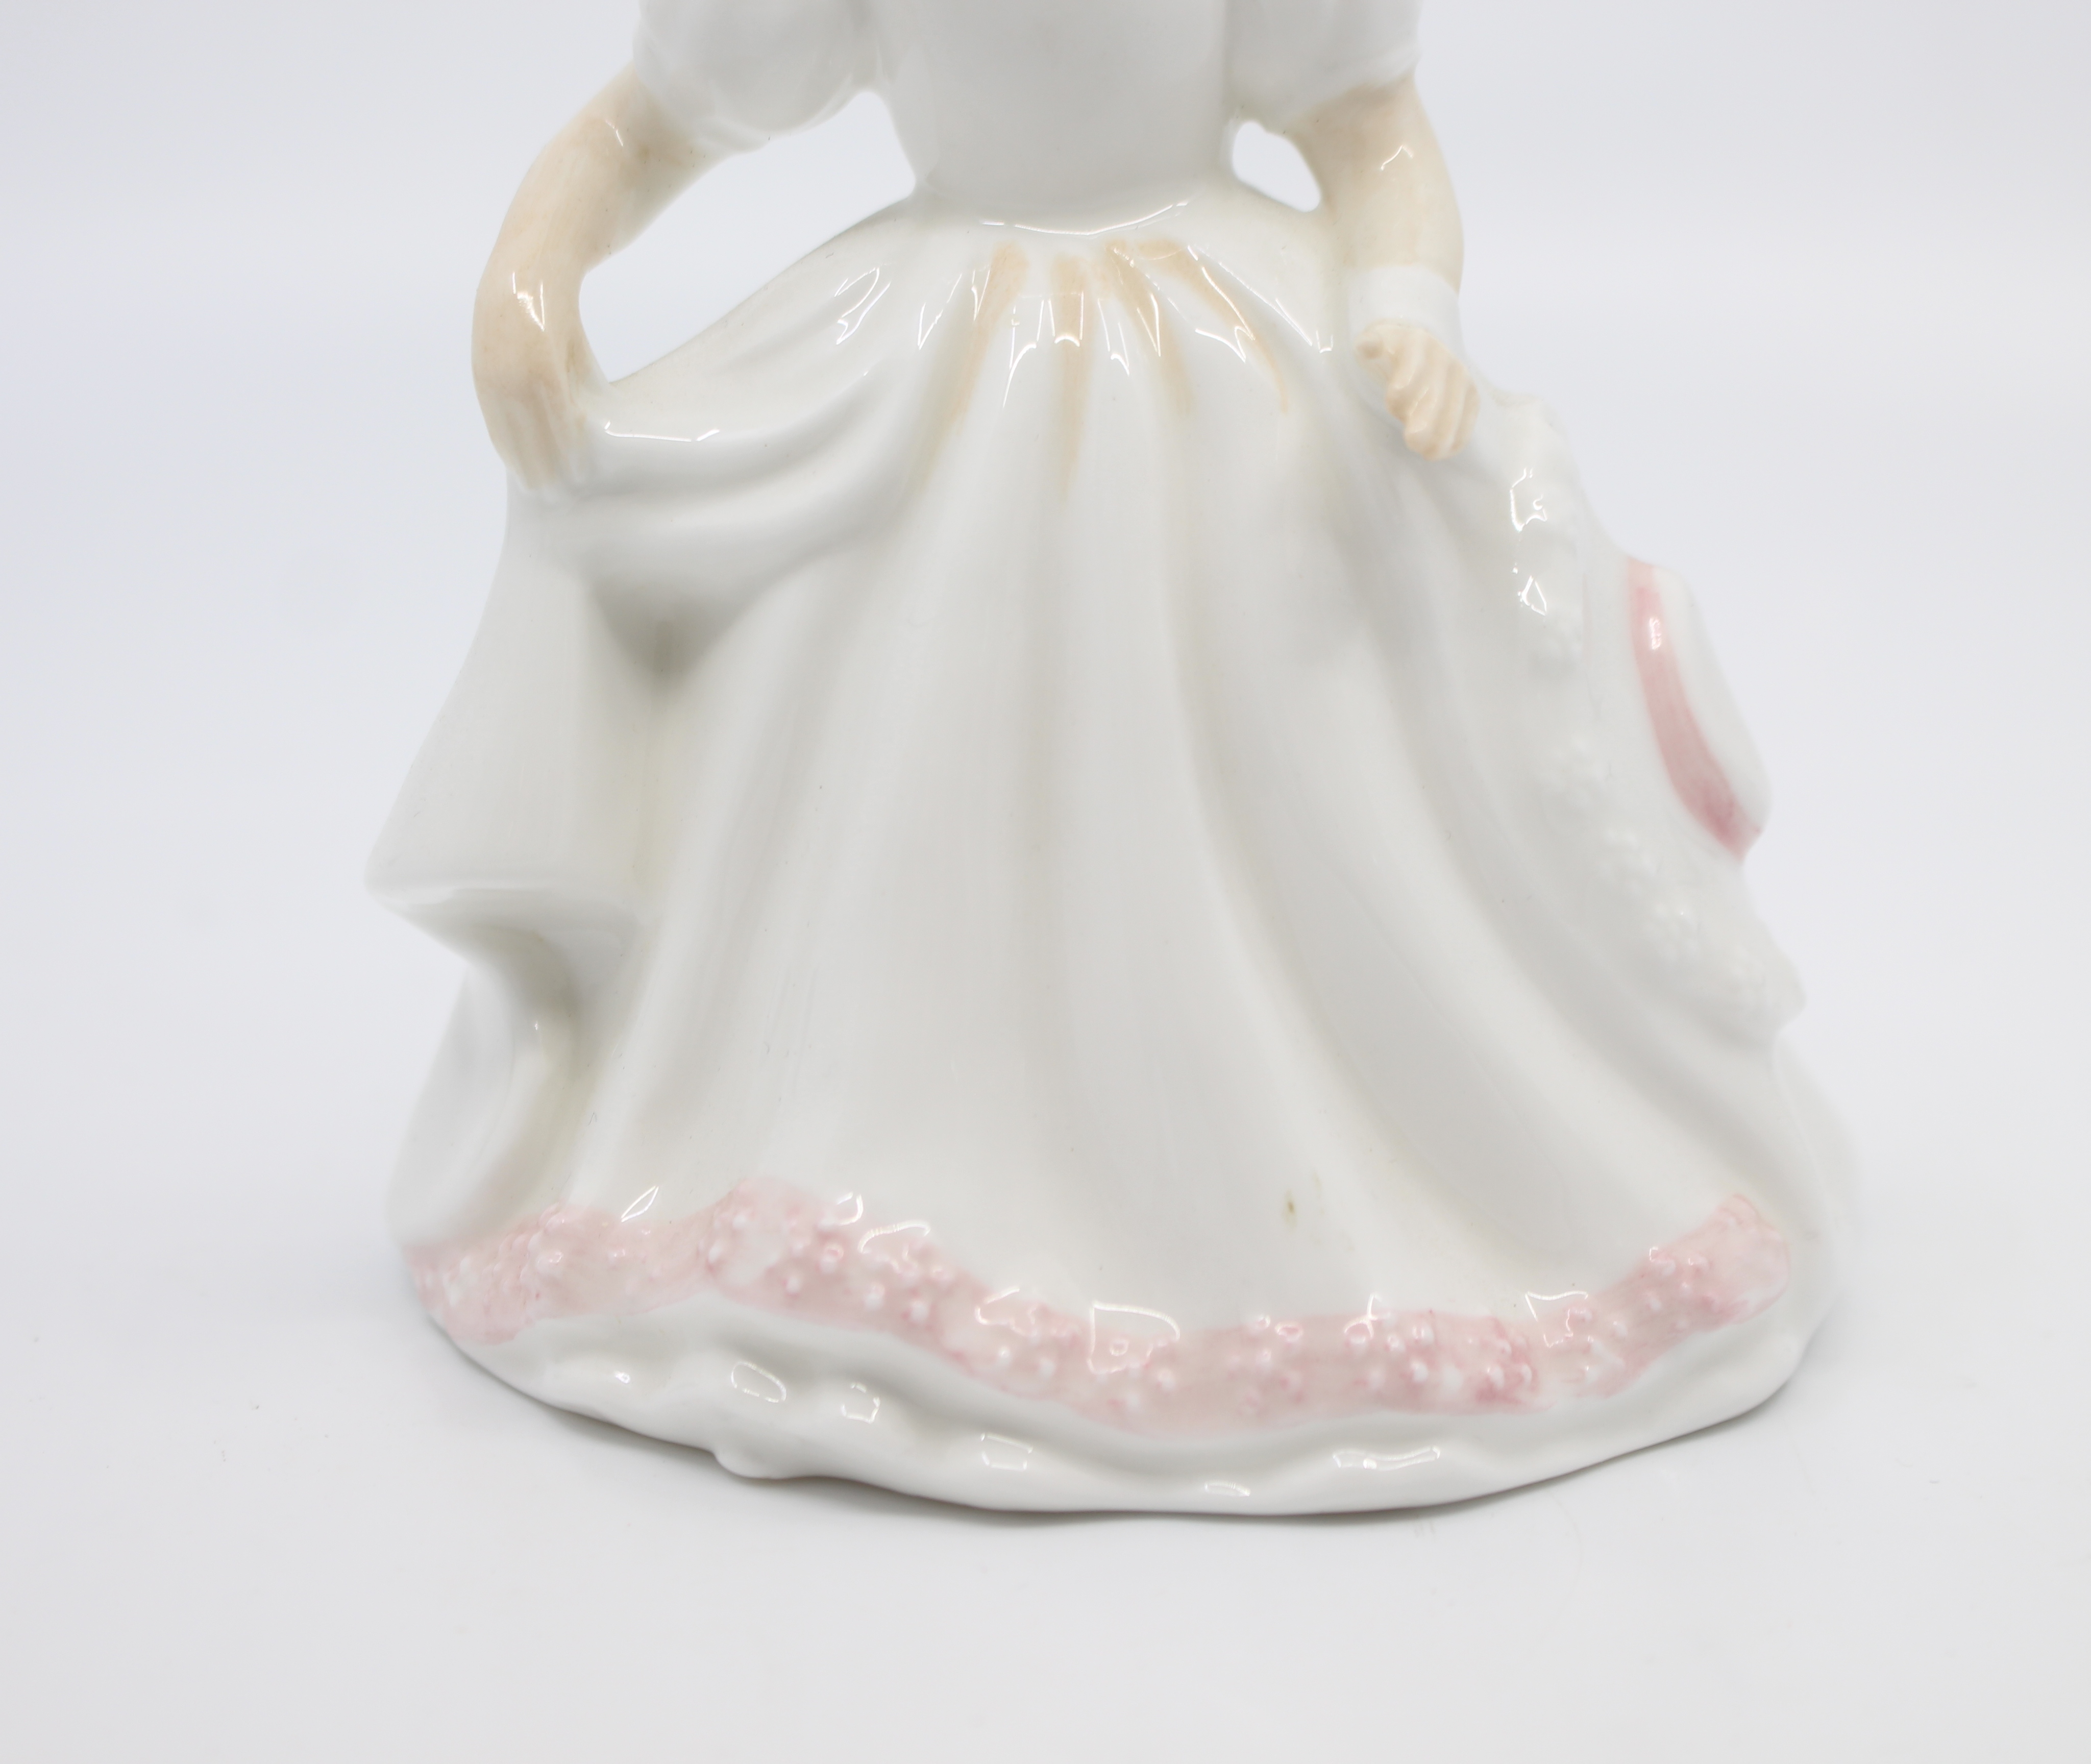 Royal Doulton Figurine Amanda HN 3635 - Image 5 of 6